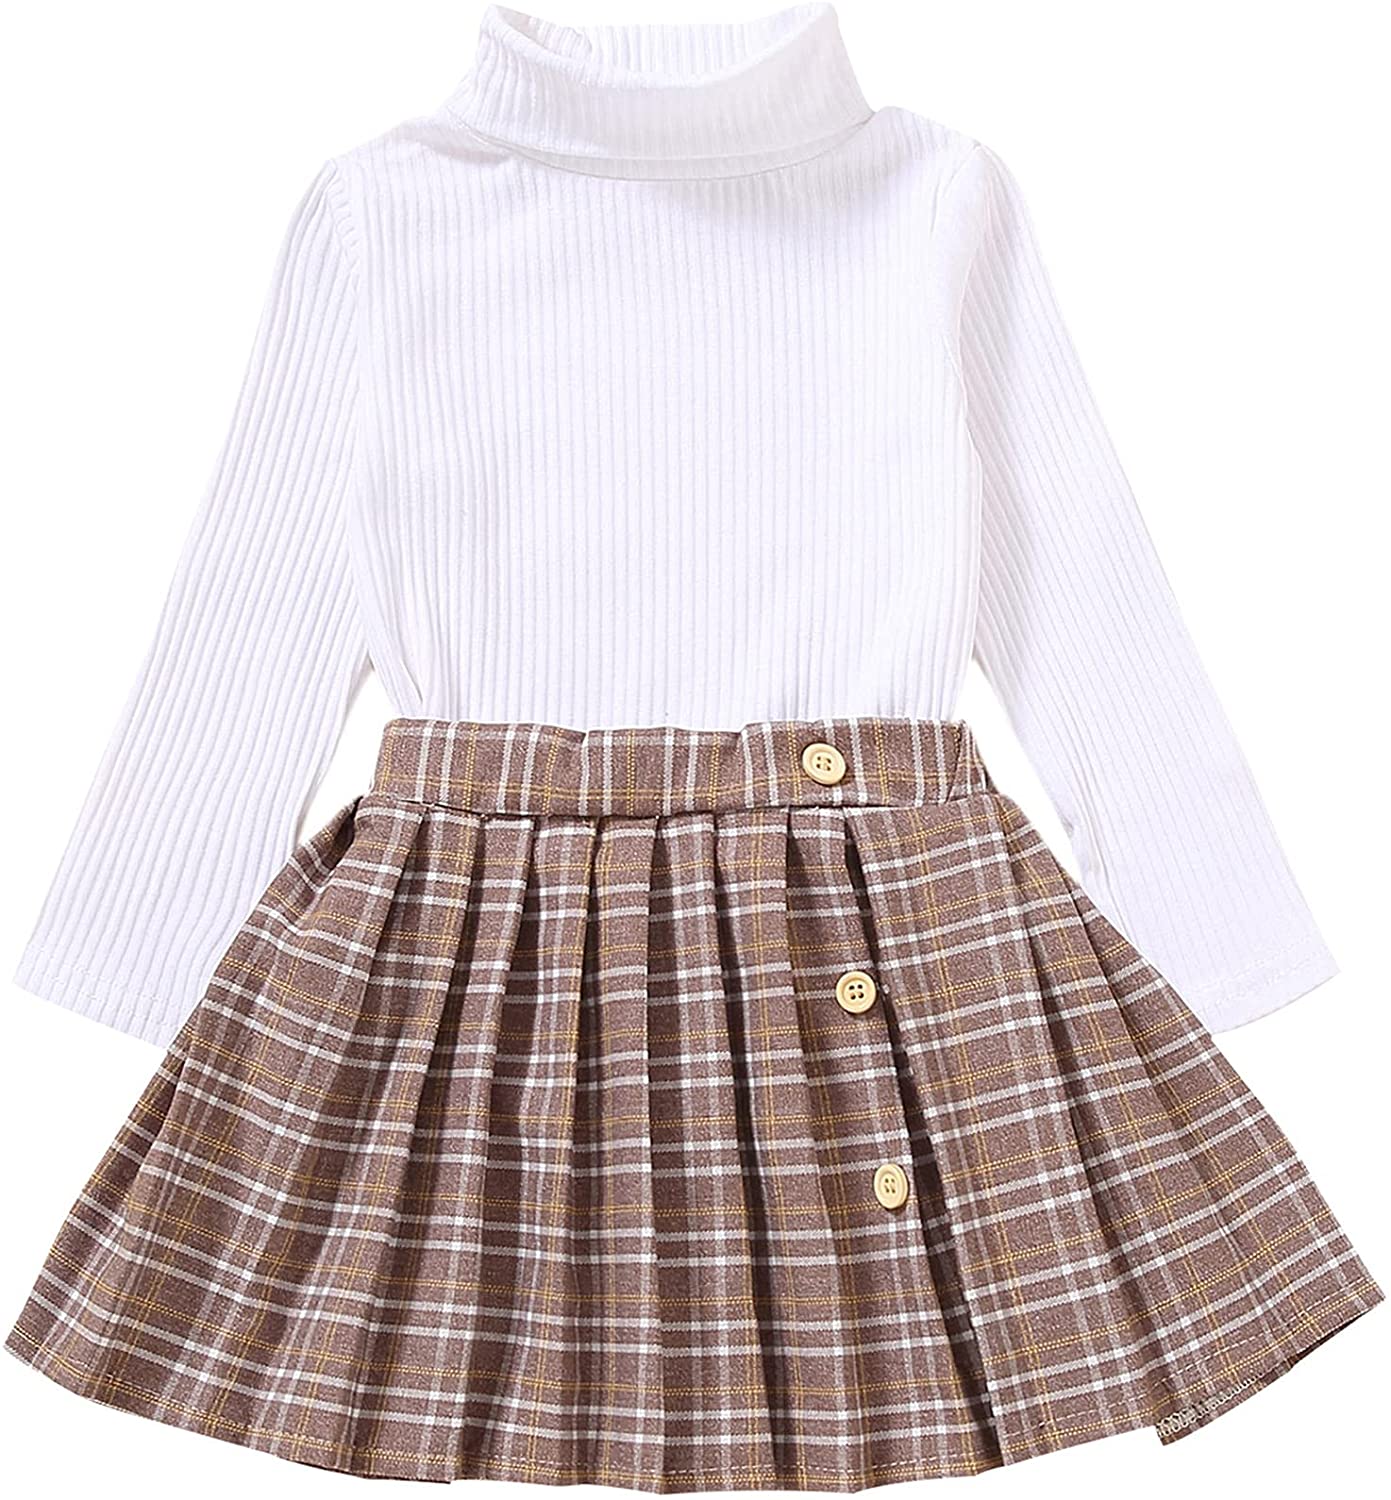 Dress Set 2PCS Kids Girls Skirt T-shirt Outfits Clothes Toddler Causal Tops